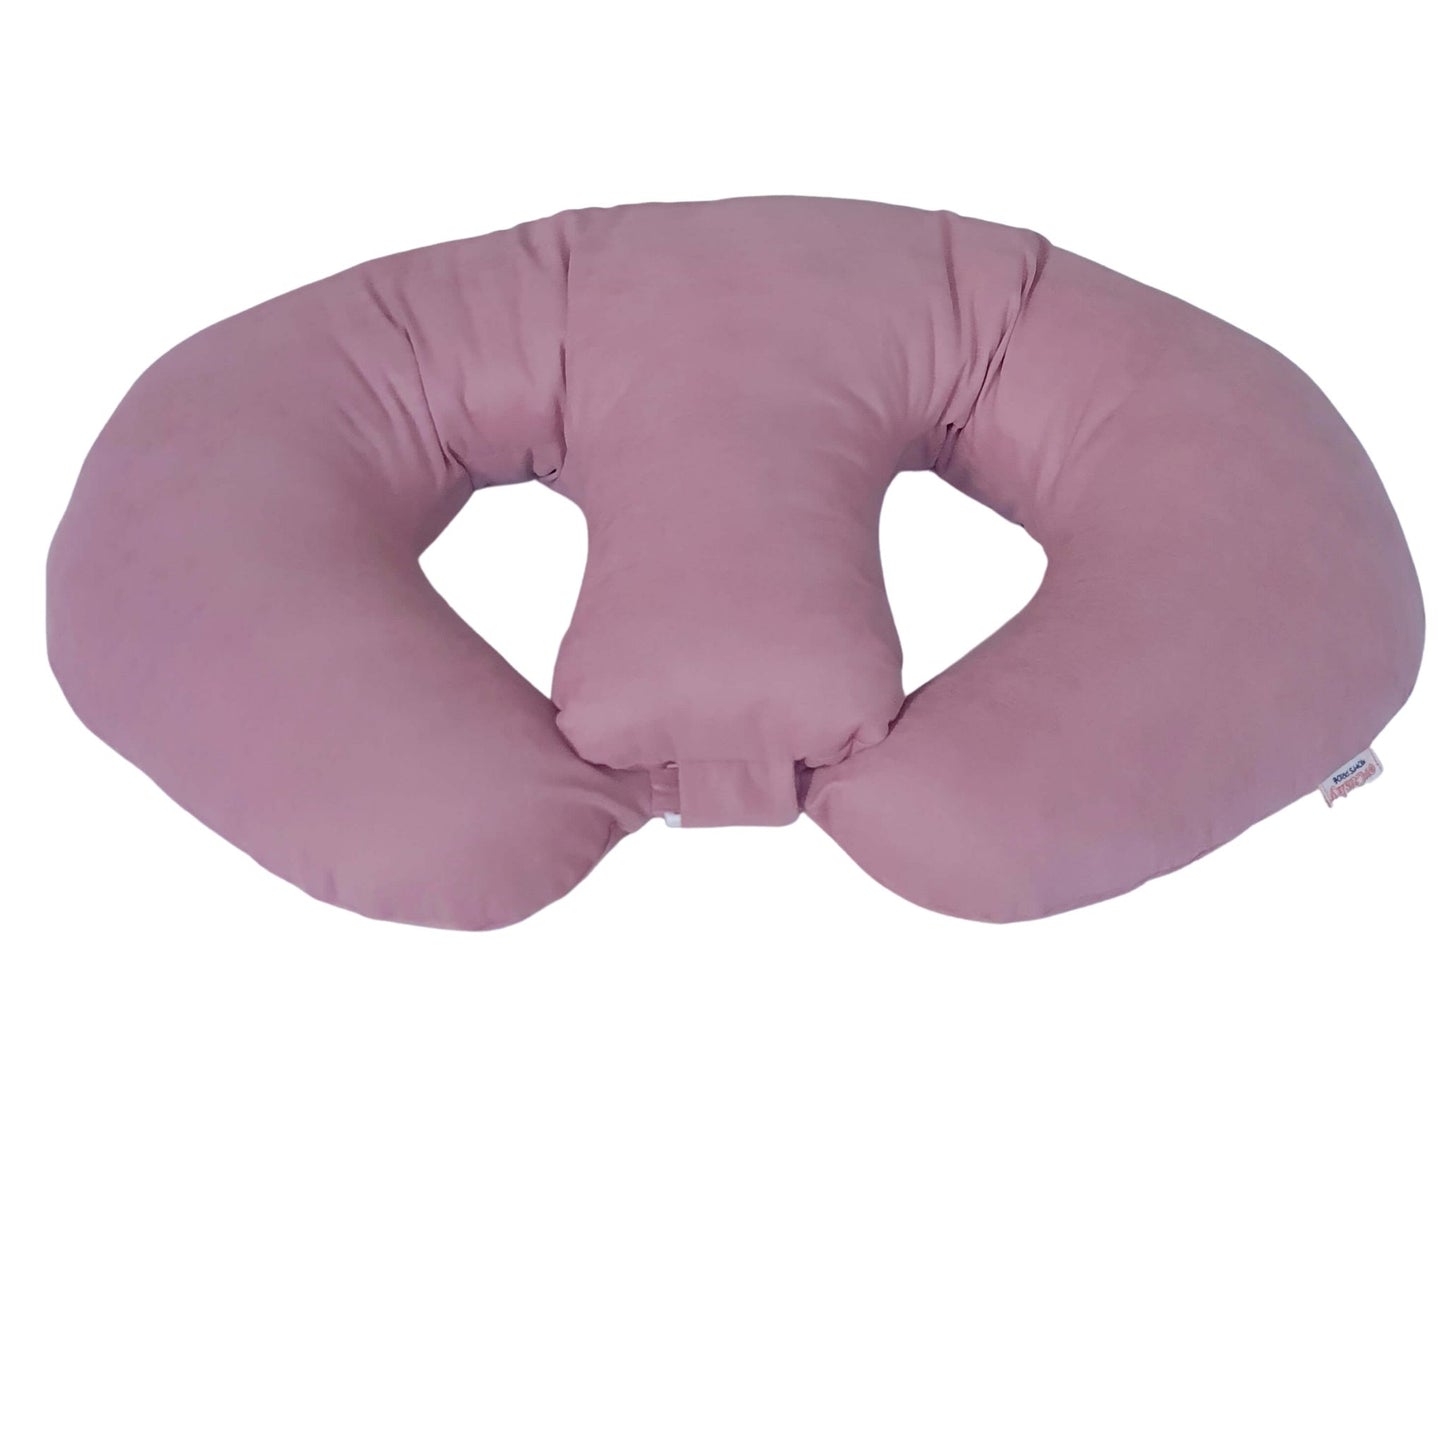 evcushy twin pillows pregnancy pillow in Ireland pink 